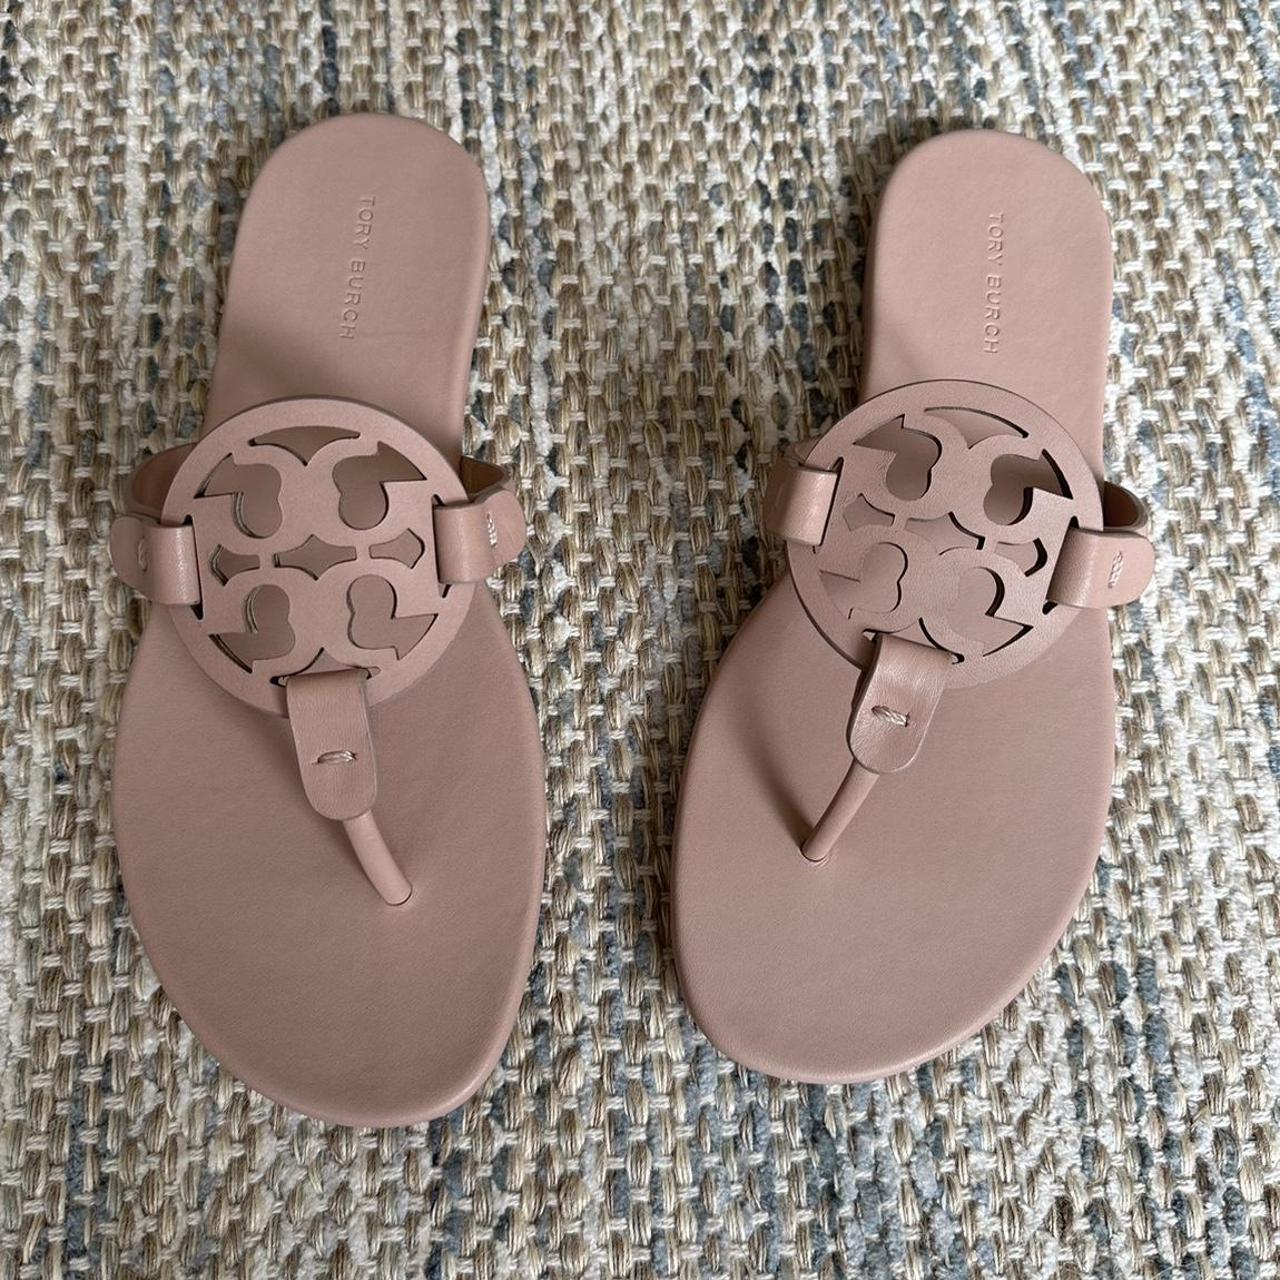 Tory Burch Women's Sandals - Pink - US 7